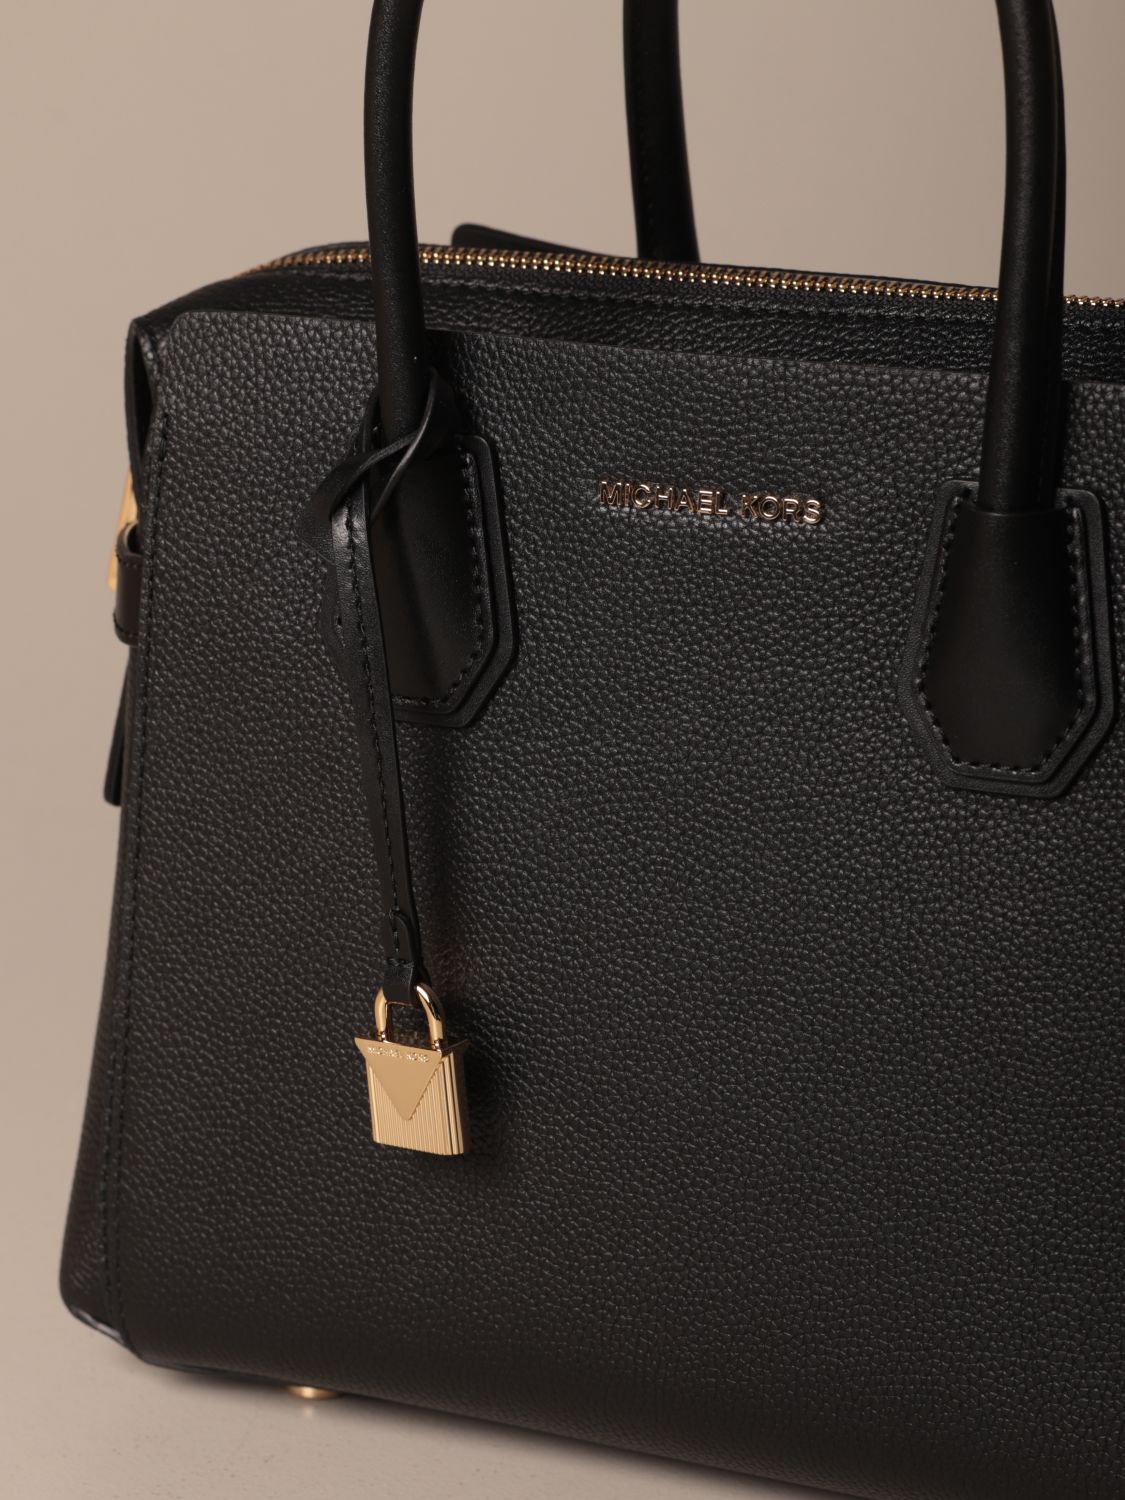 Mercer Michael Michael Kors bag in textured leather | Handbag Michael